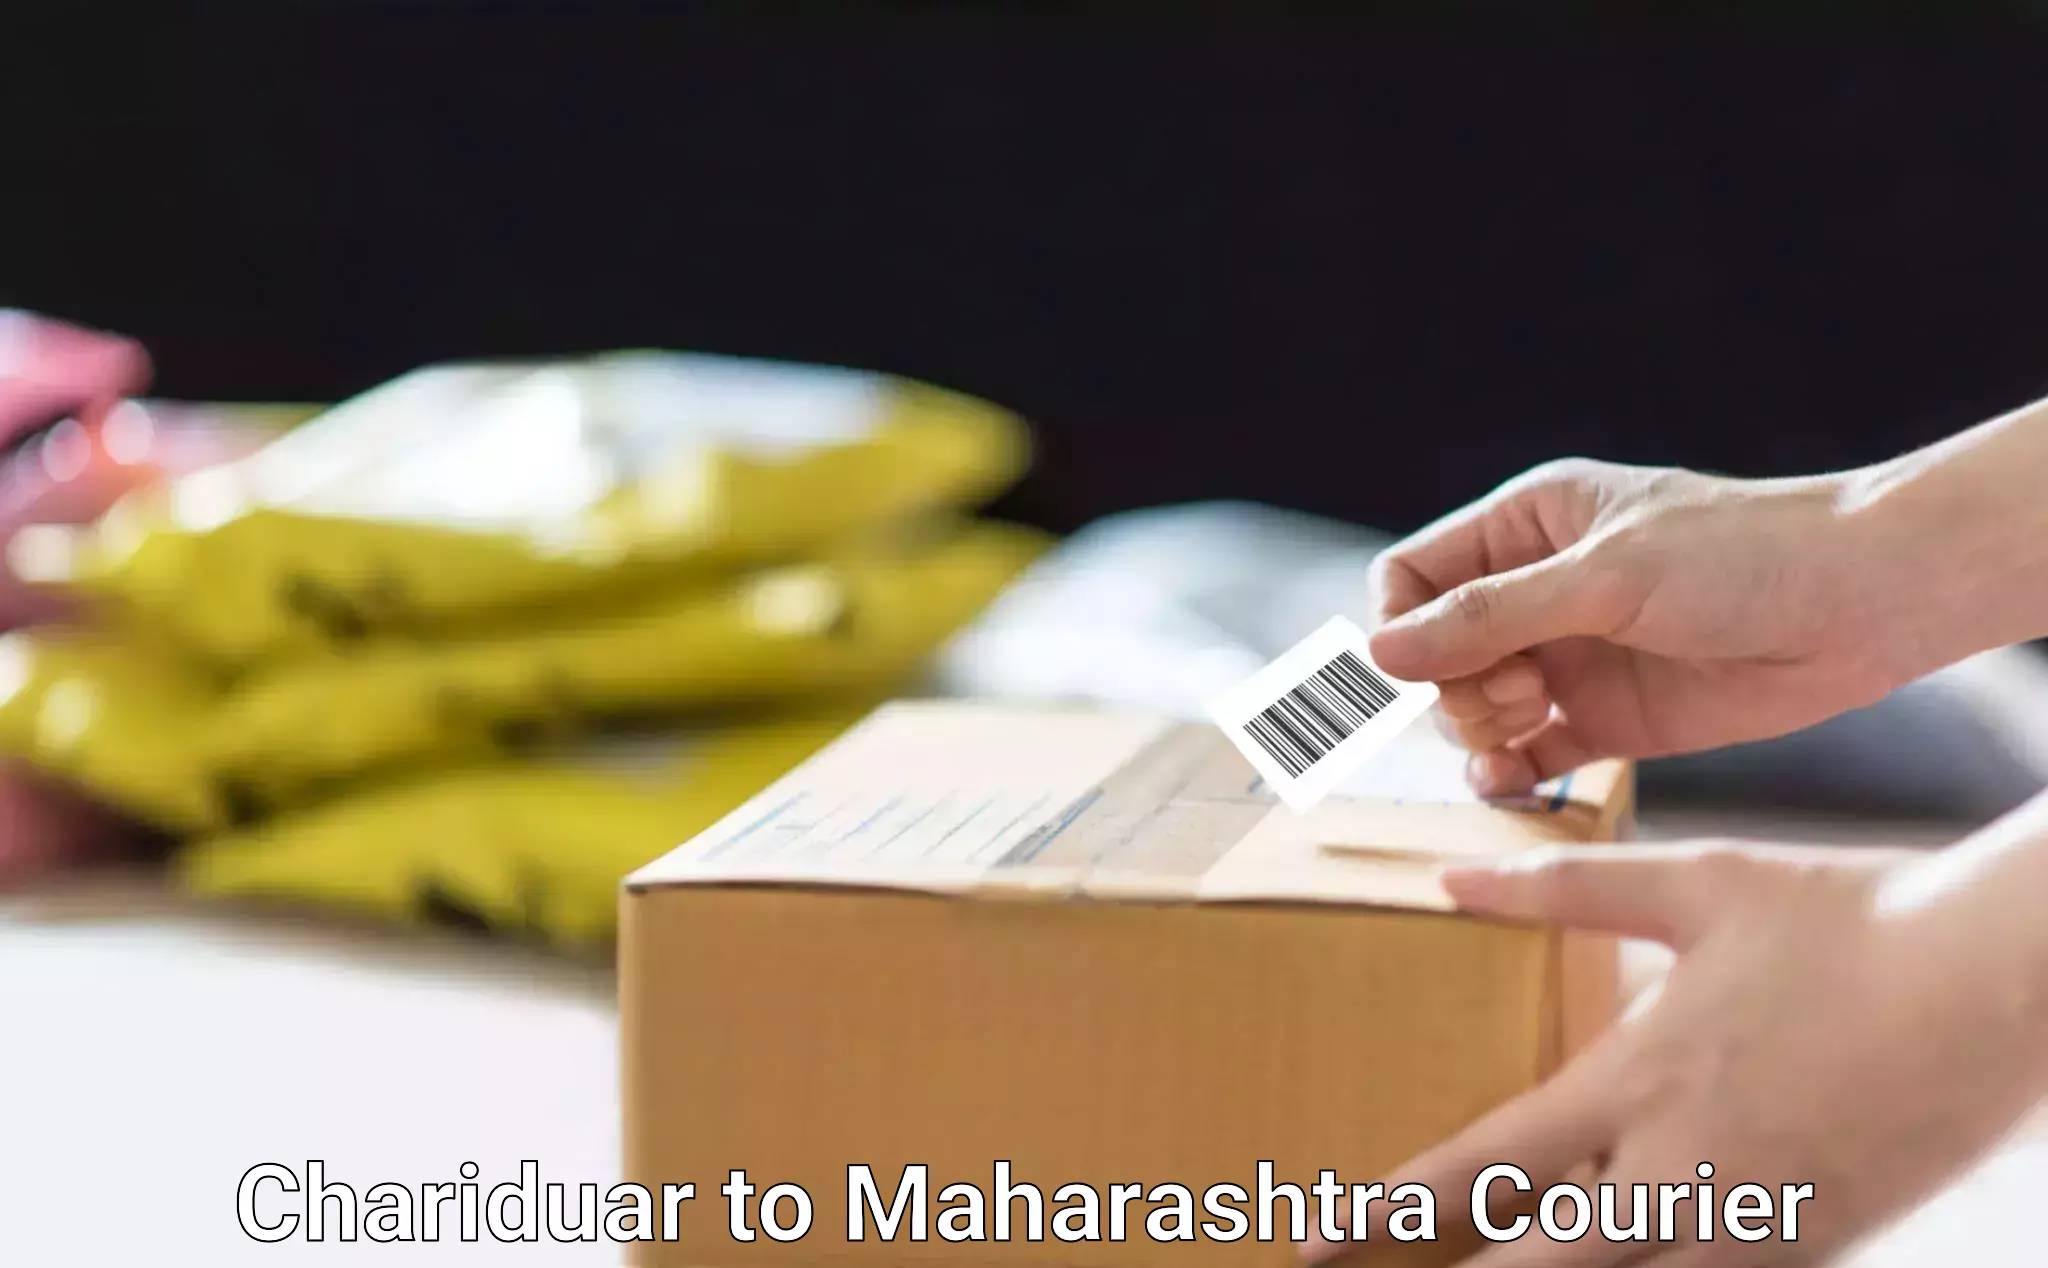 Courier service booking Chariduar to Mumbai Port